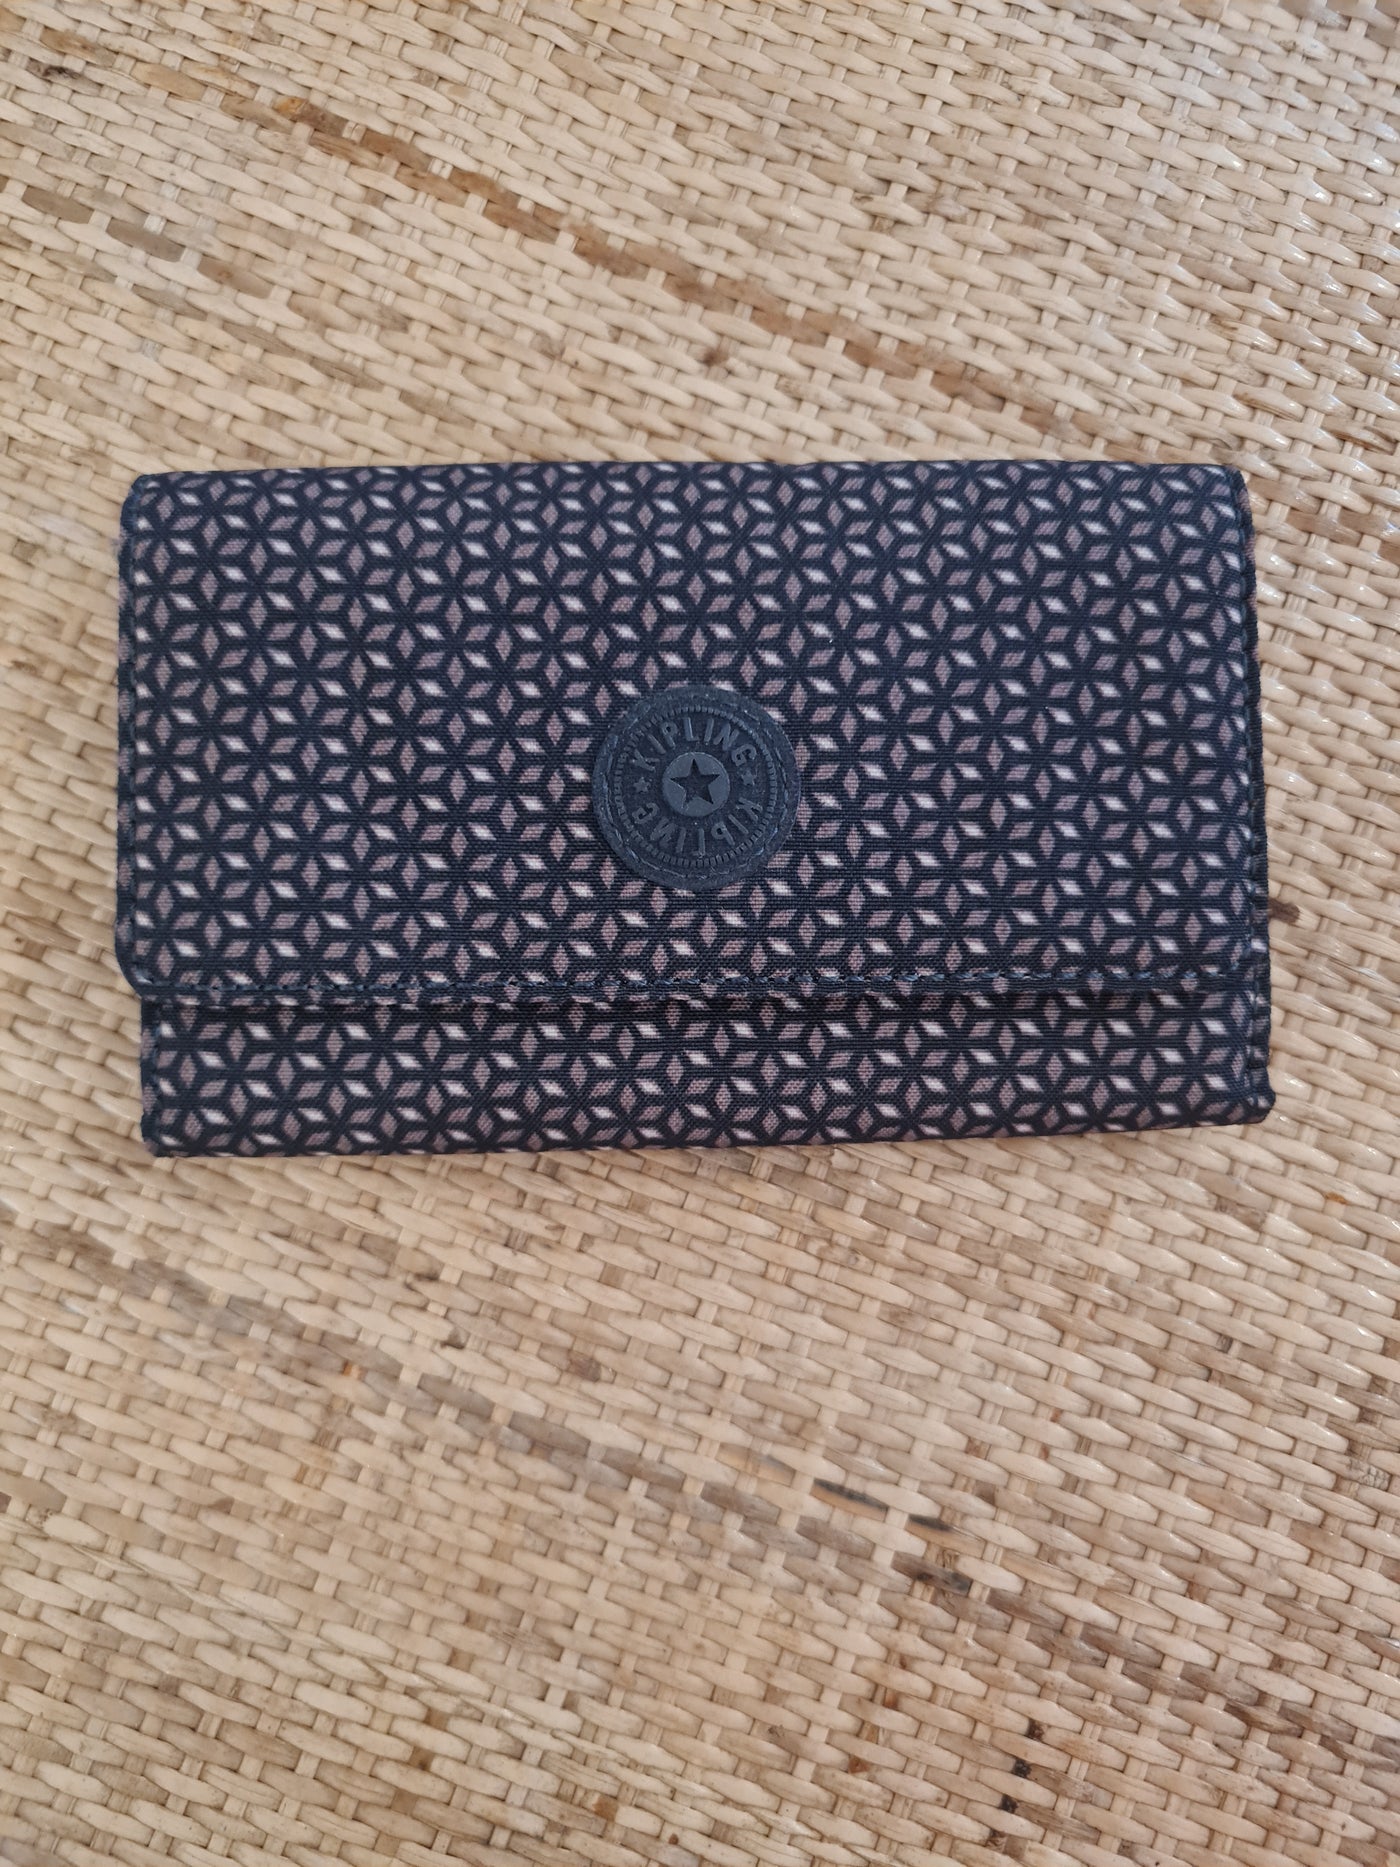 Kipling patterned wallet